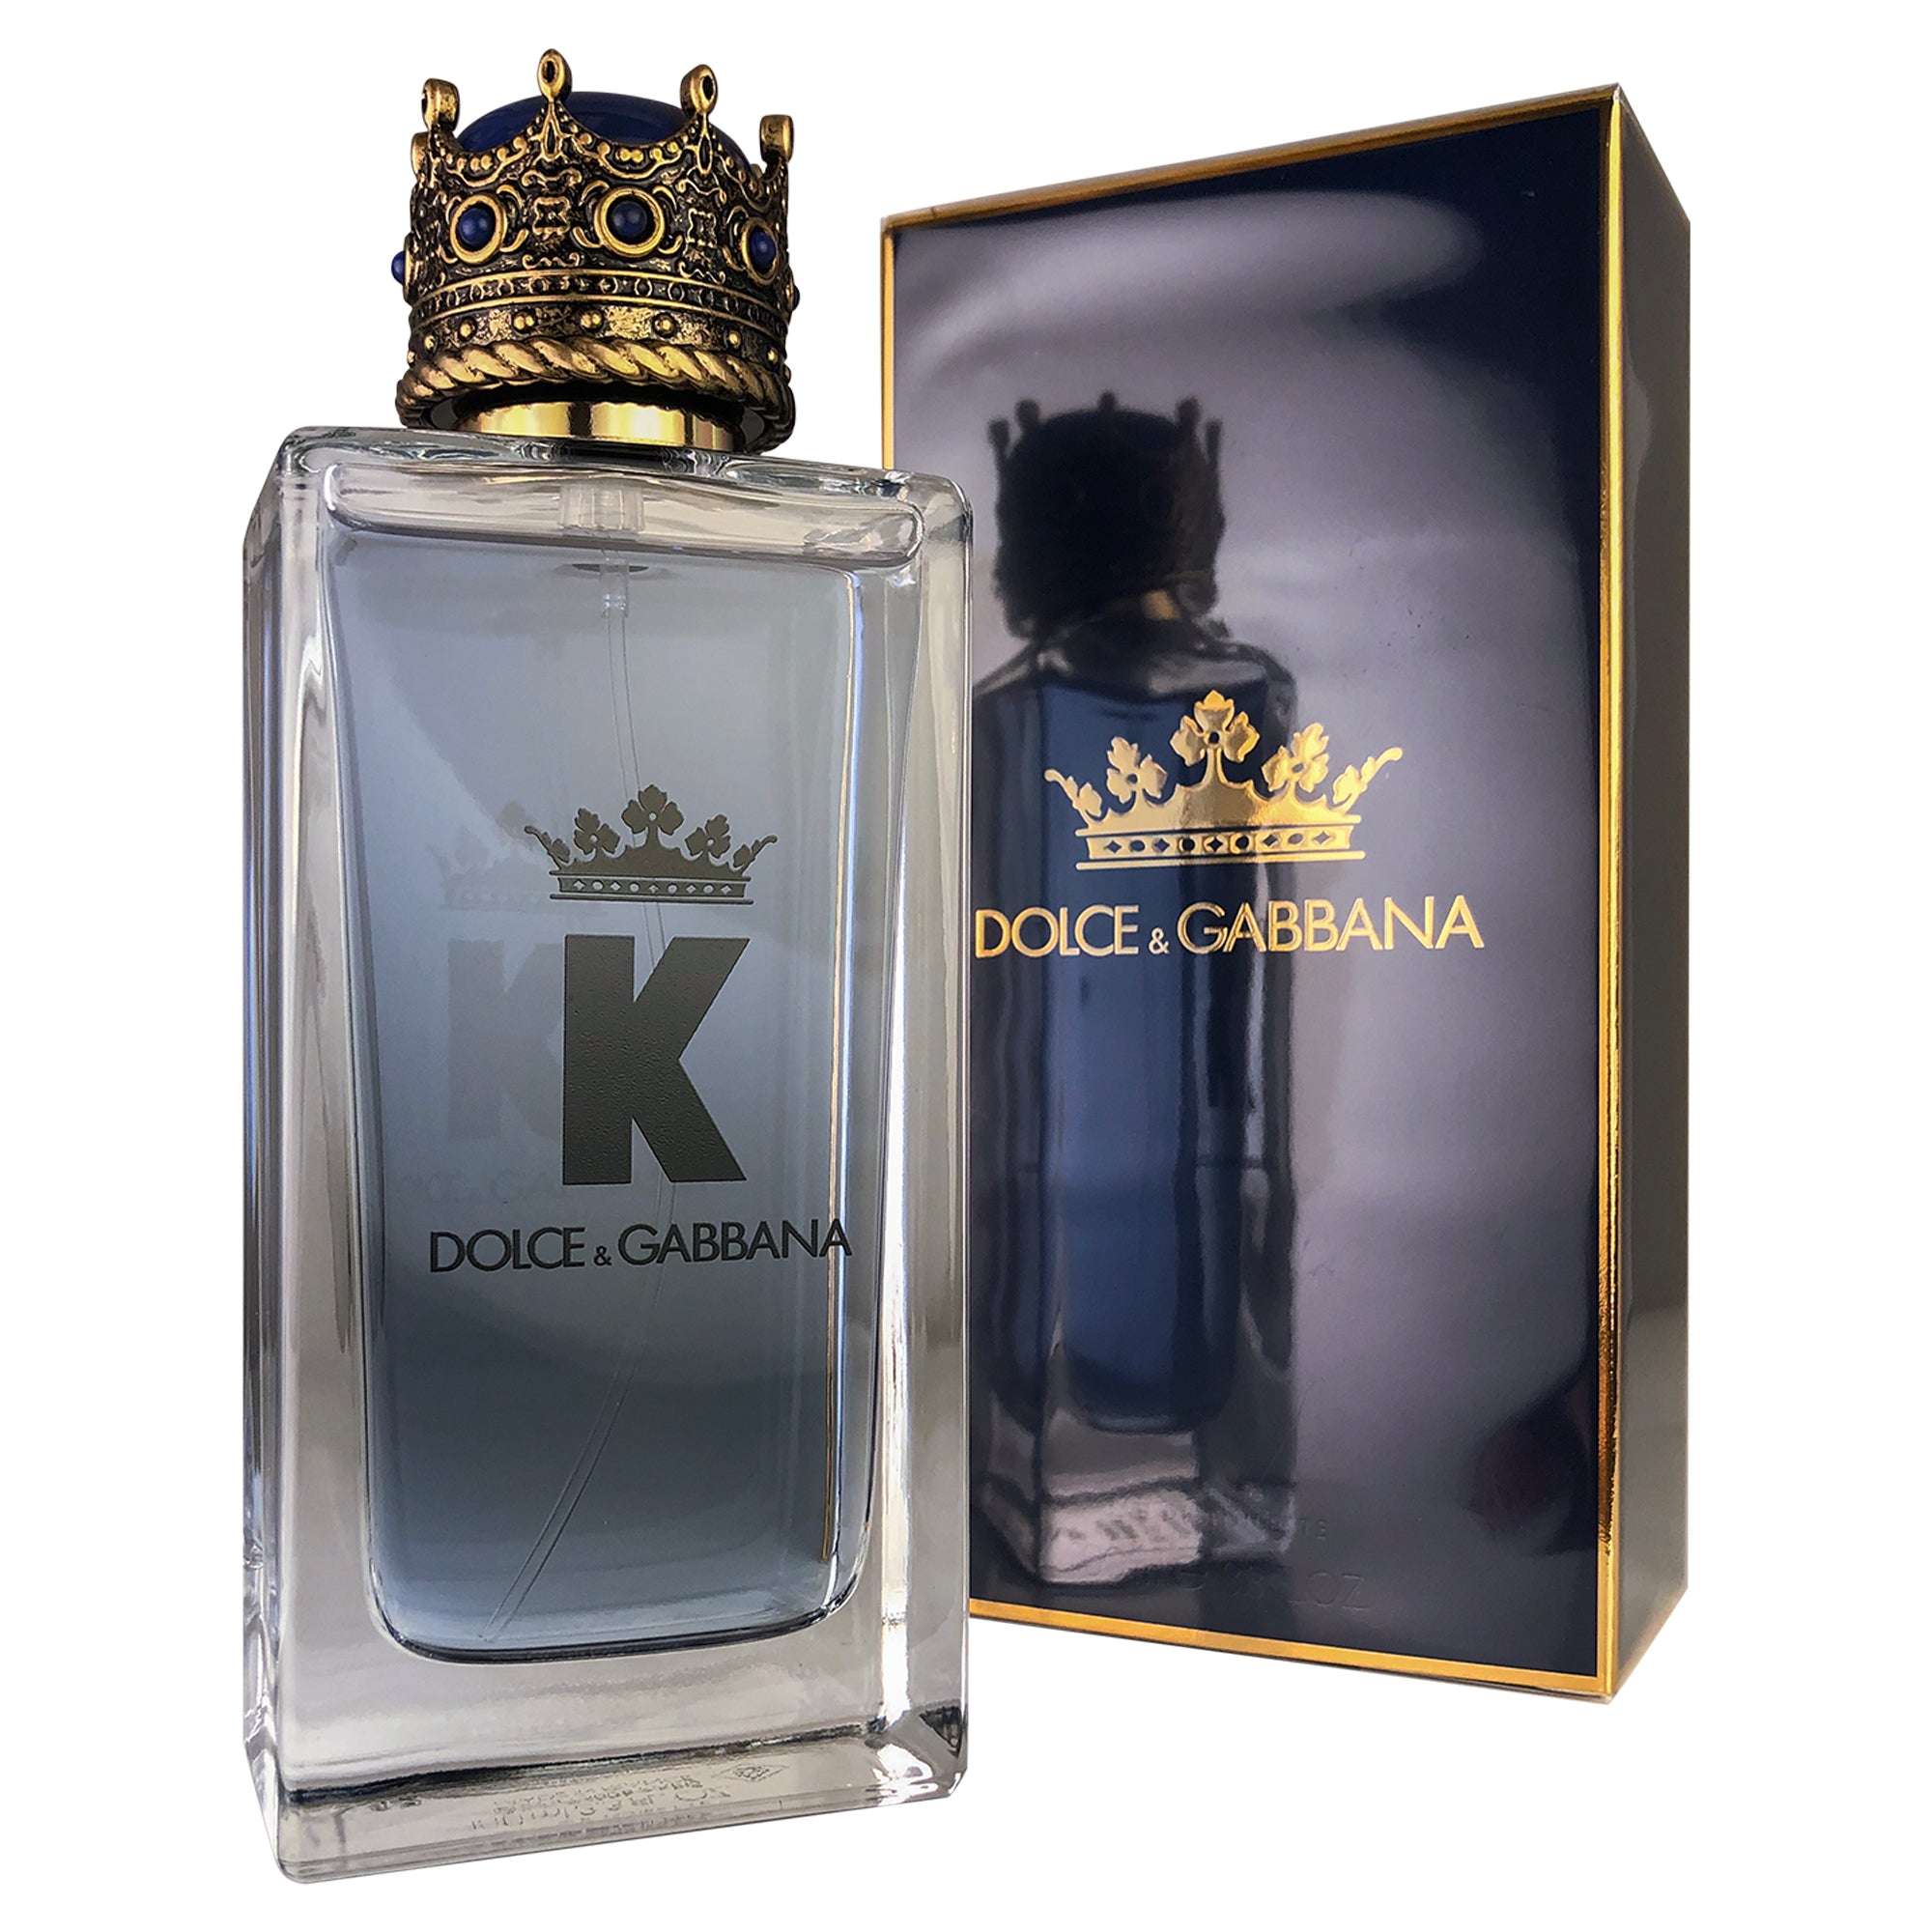 Dolce & Gabbana K Eau de Toilette for Men